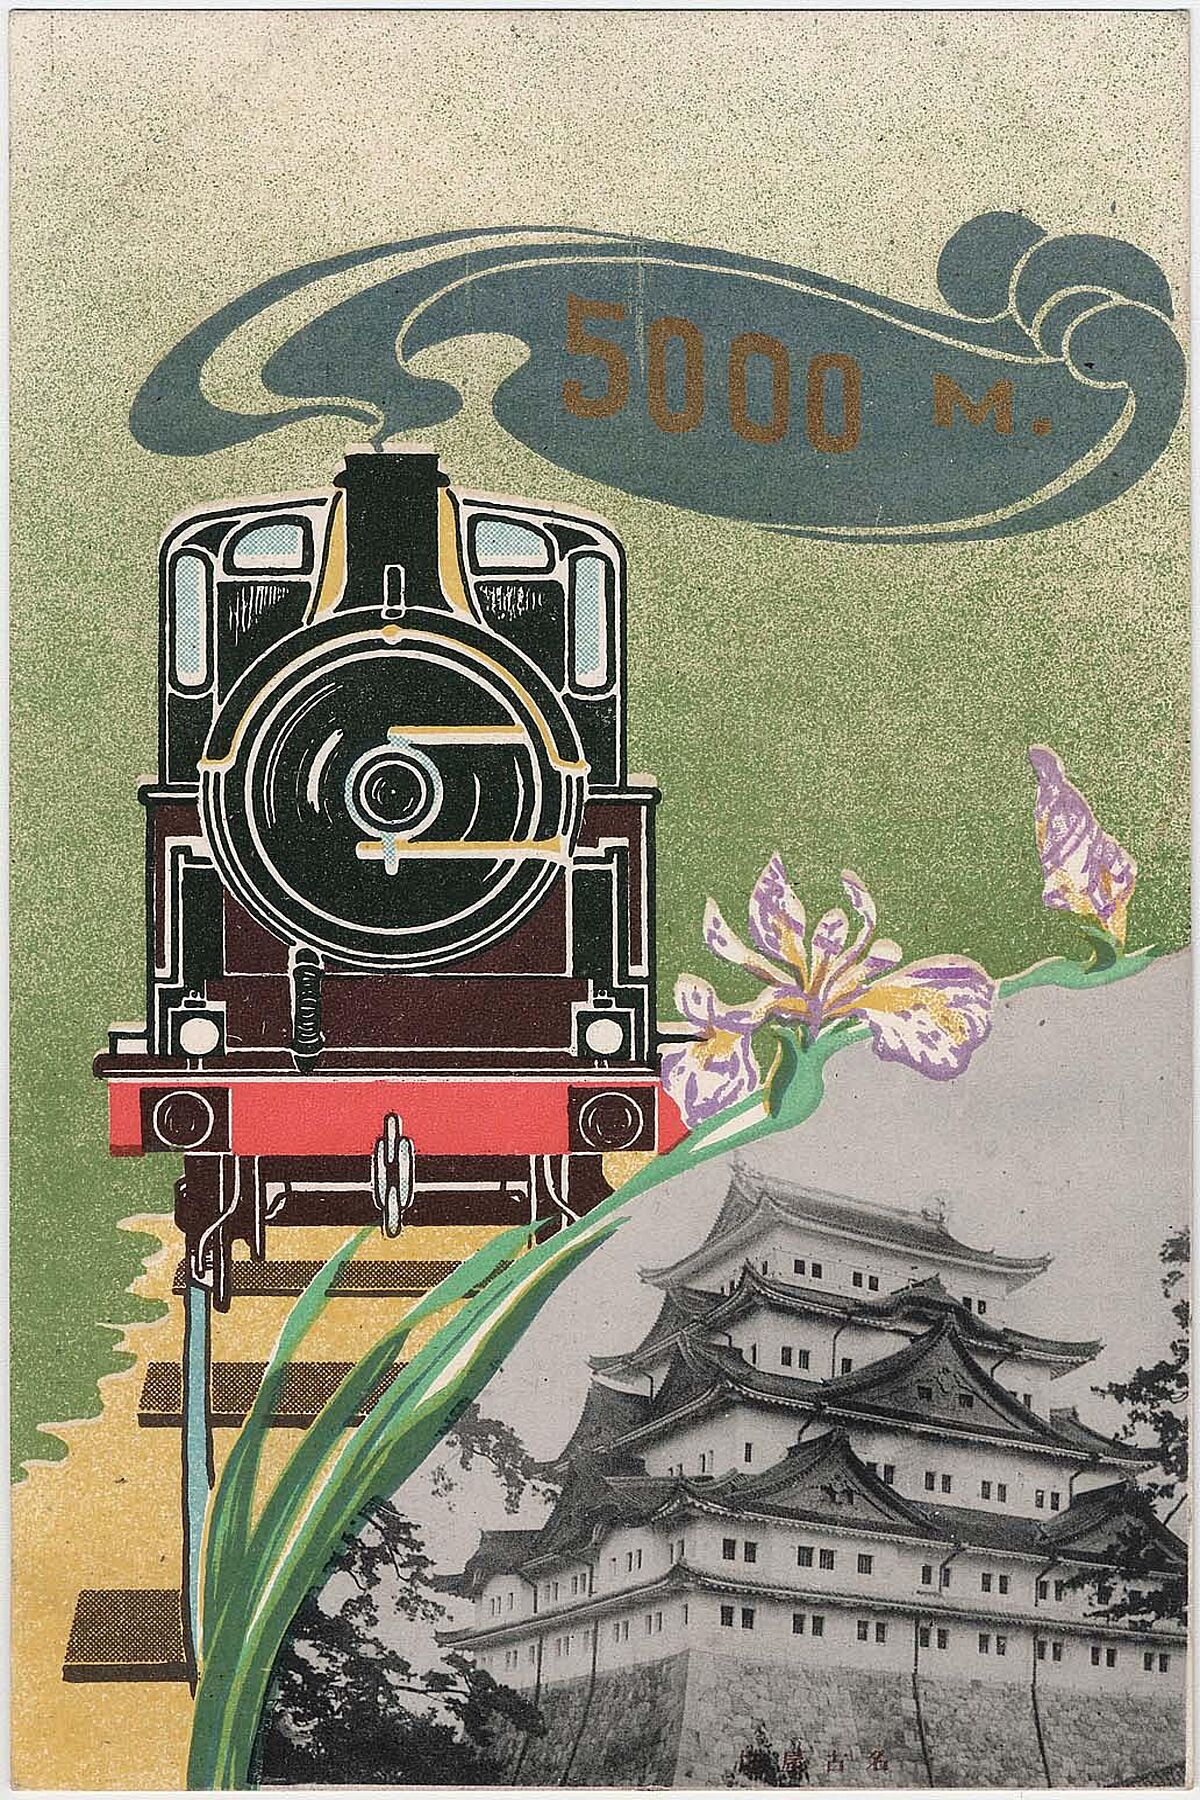 Commemorating the Completion of 5000 Miles of Railroad Track  鉄道５０００マイル祝賀記念Artist unknown, Japanese Printed by_ Tokyo Printing Company (Tokyo insatsu kabushiki kaisha) Japanese Late Meiji era 1906